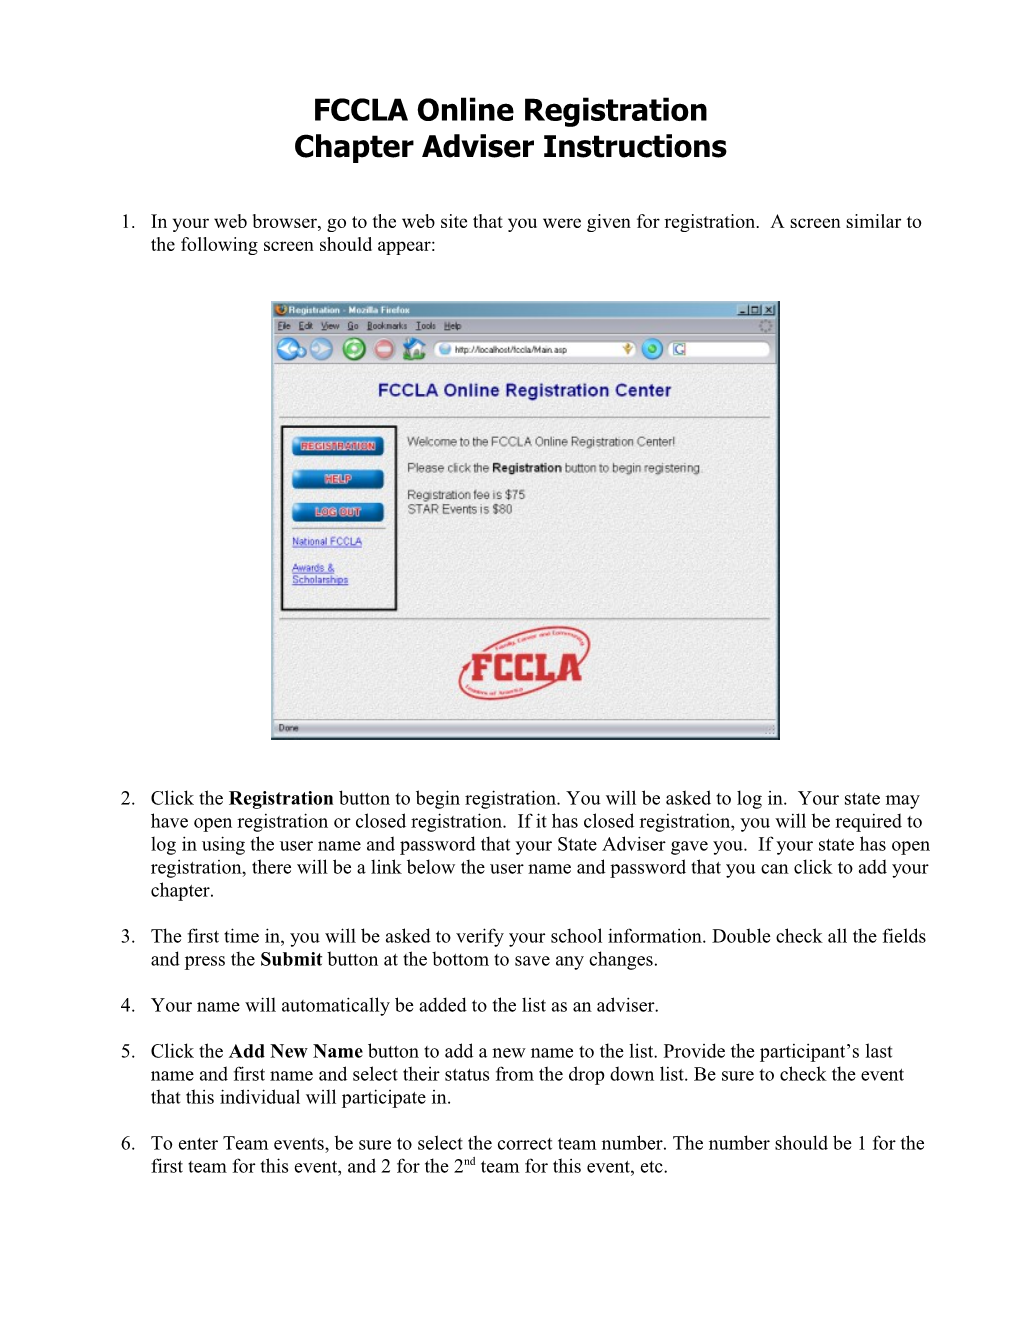 TSA Online Conference Registration Instructions